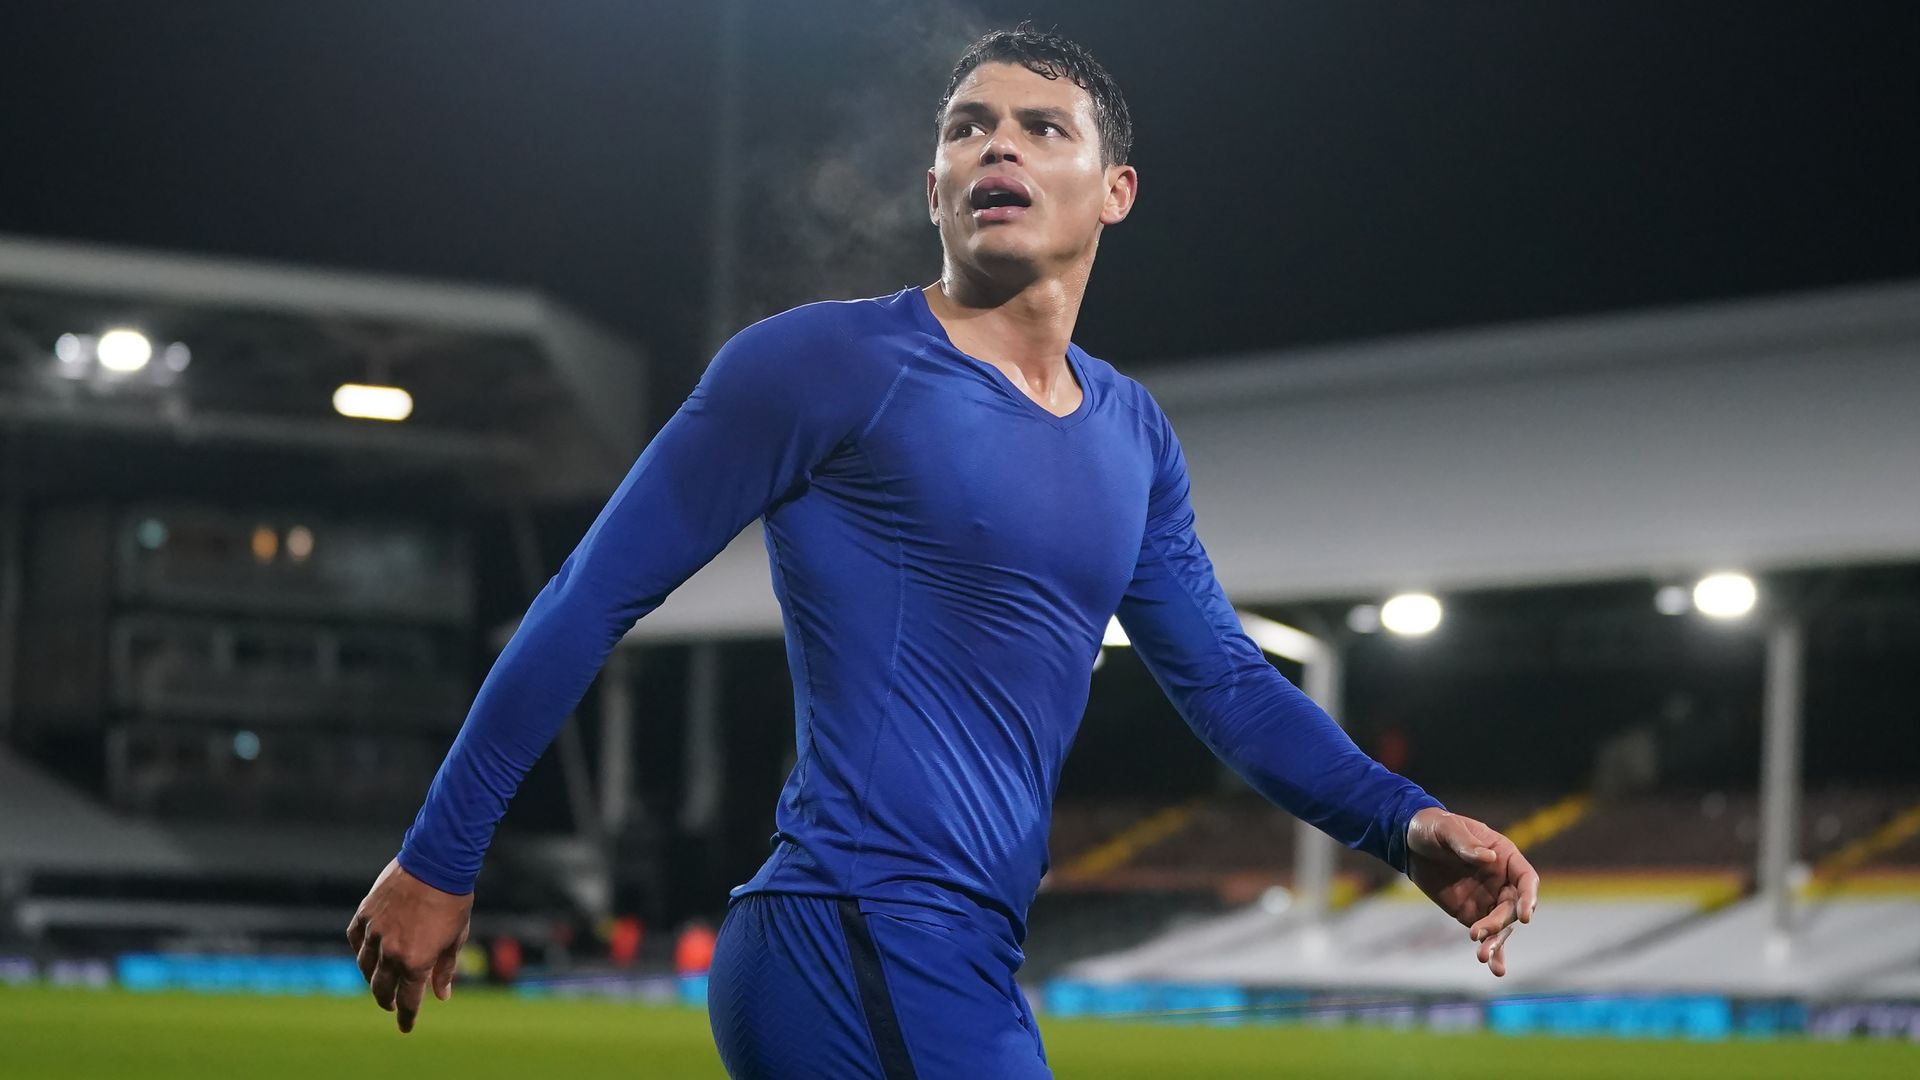 Barnsley vs Chelsea preview: Silva won't be rushed back